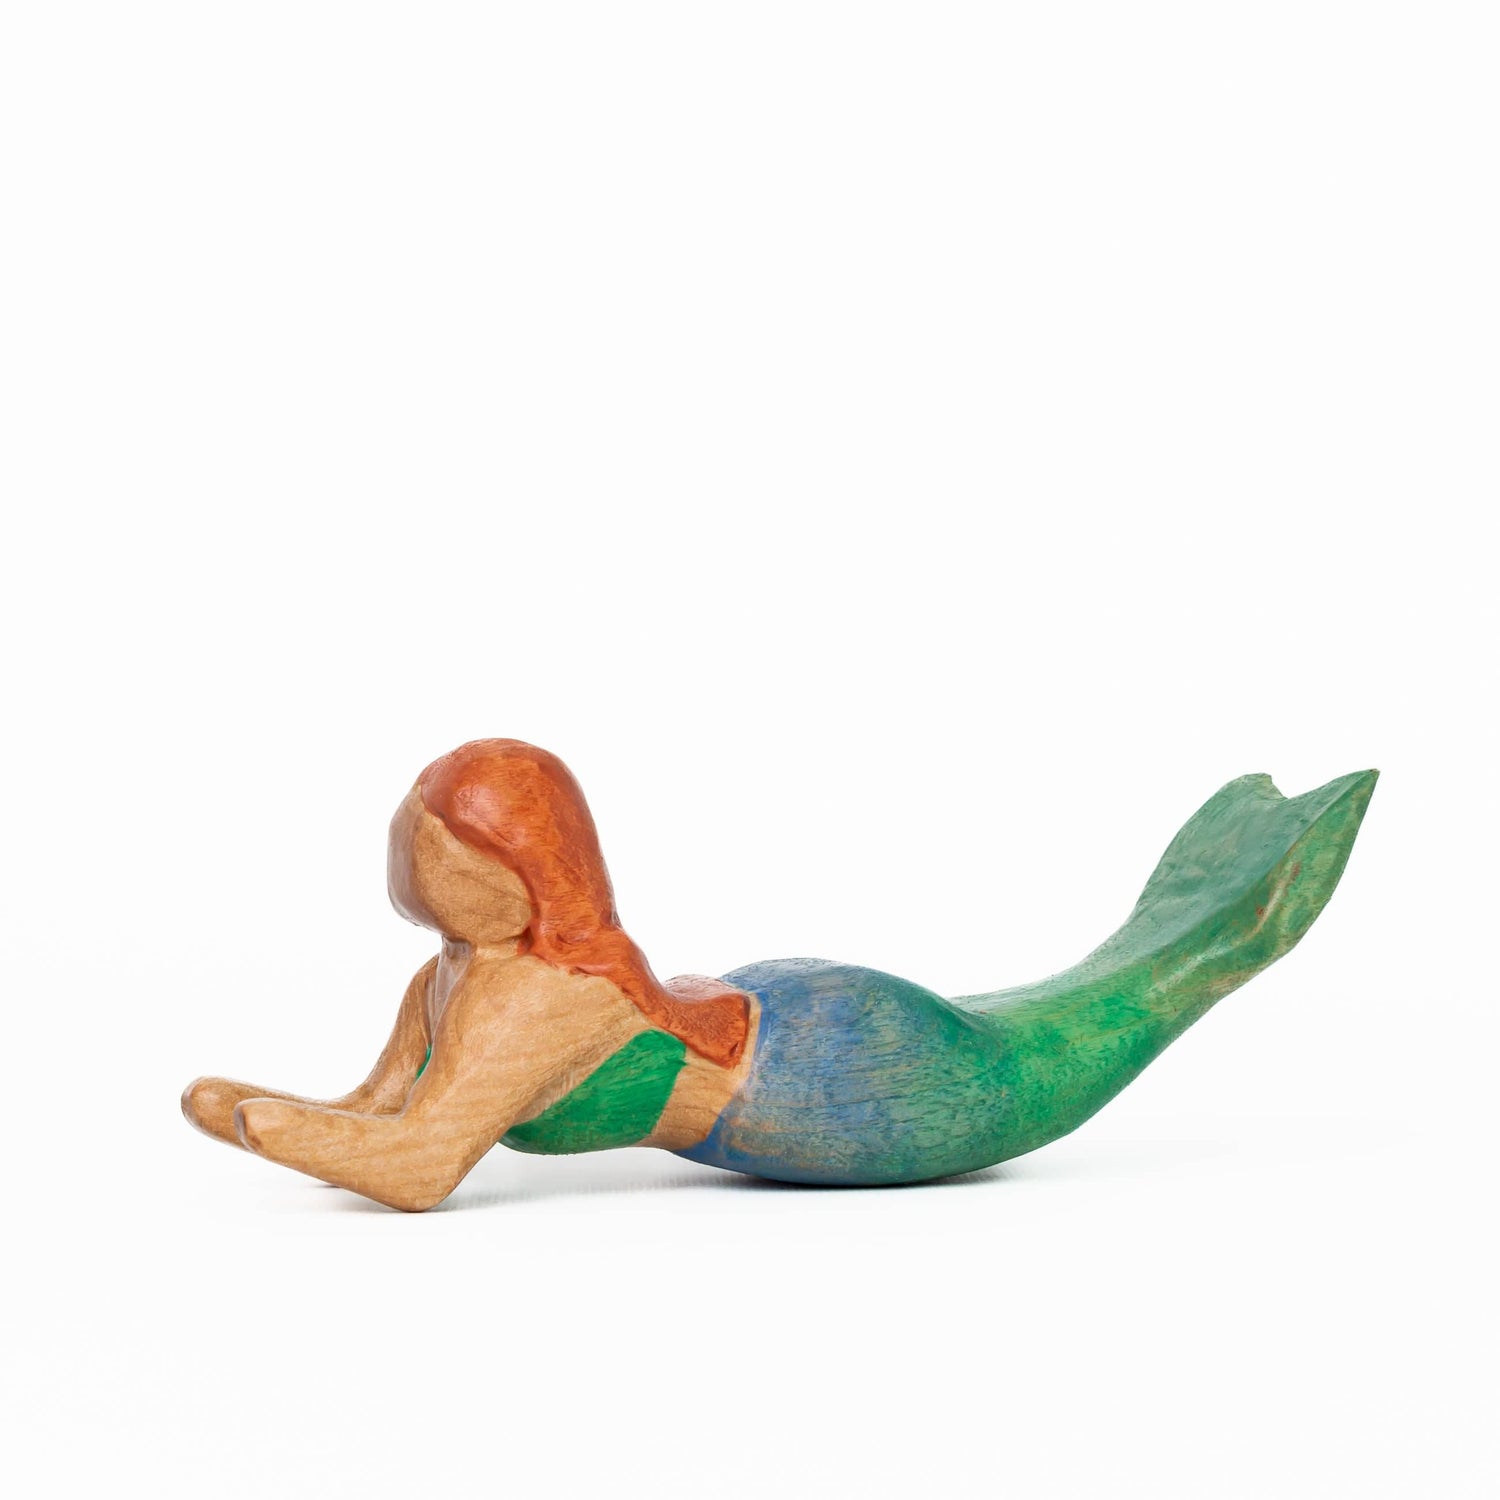 Bumbleberry Toys Wooden Animals "Marina Mermaid" Wooden Fairytale Toy (Handmade in Canada)